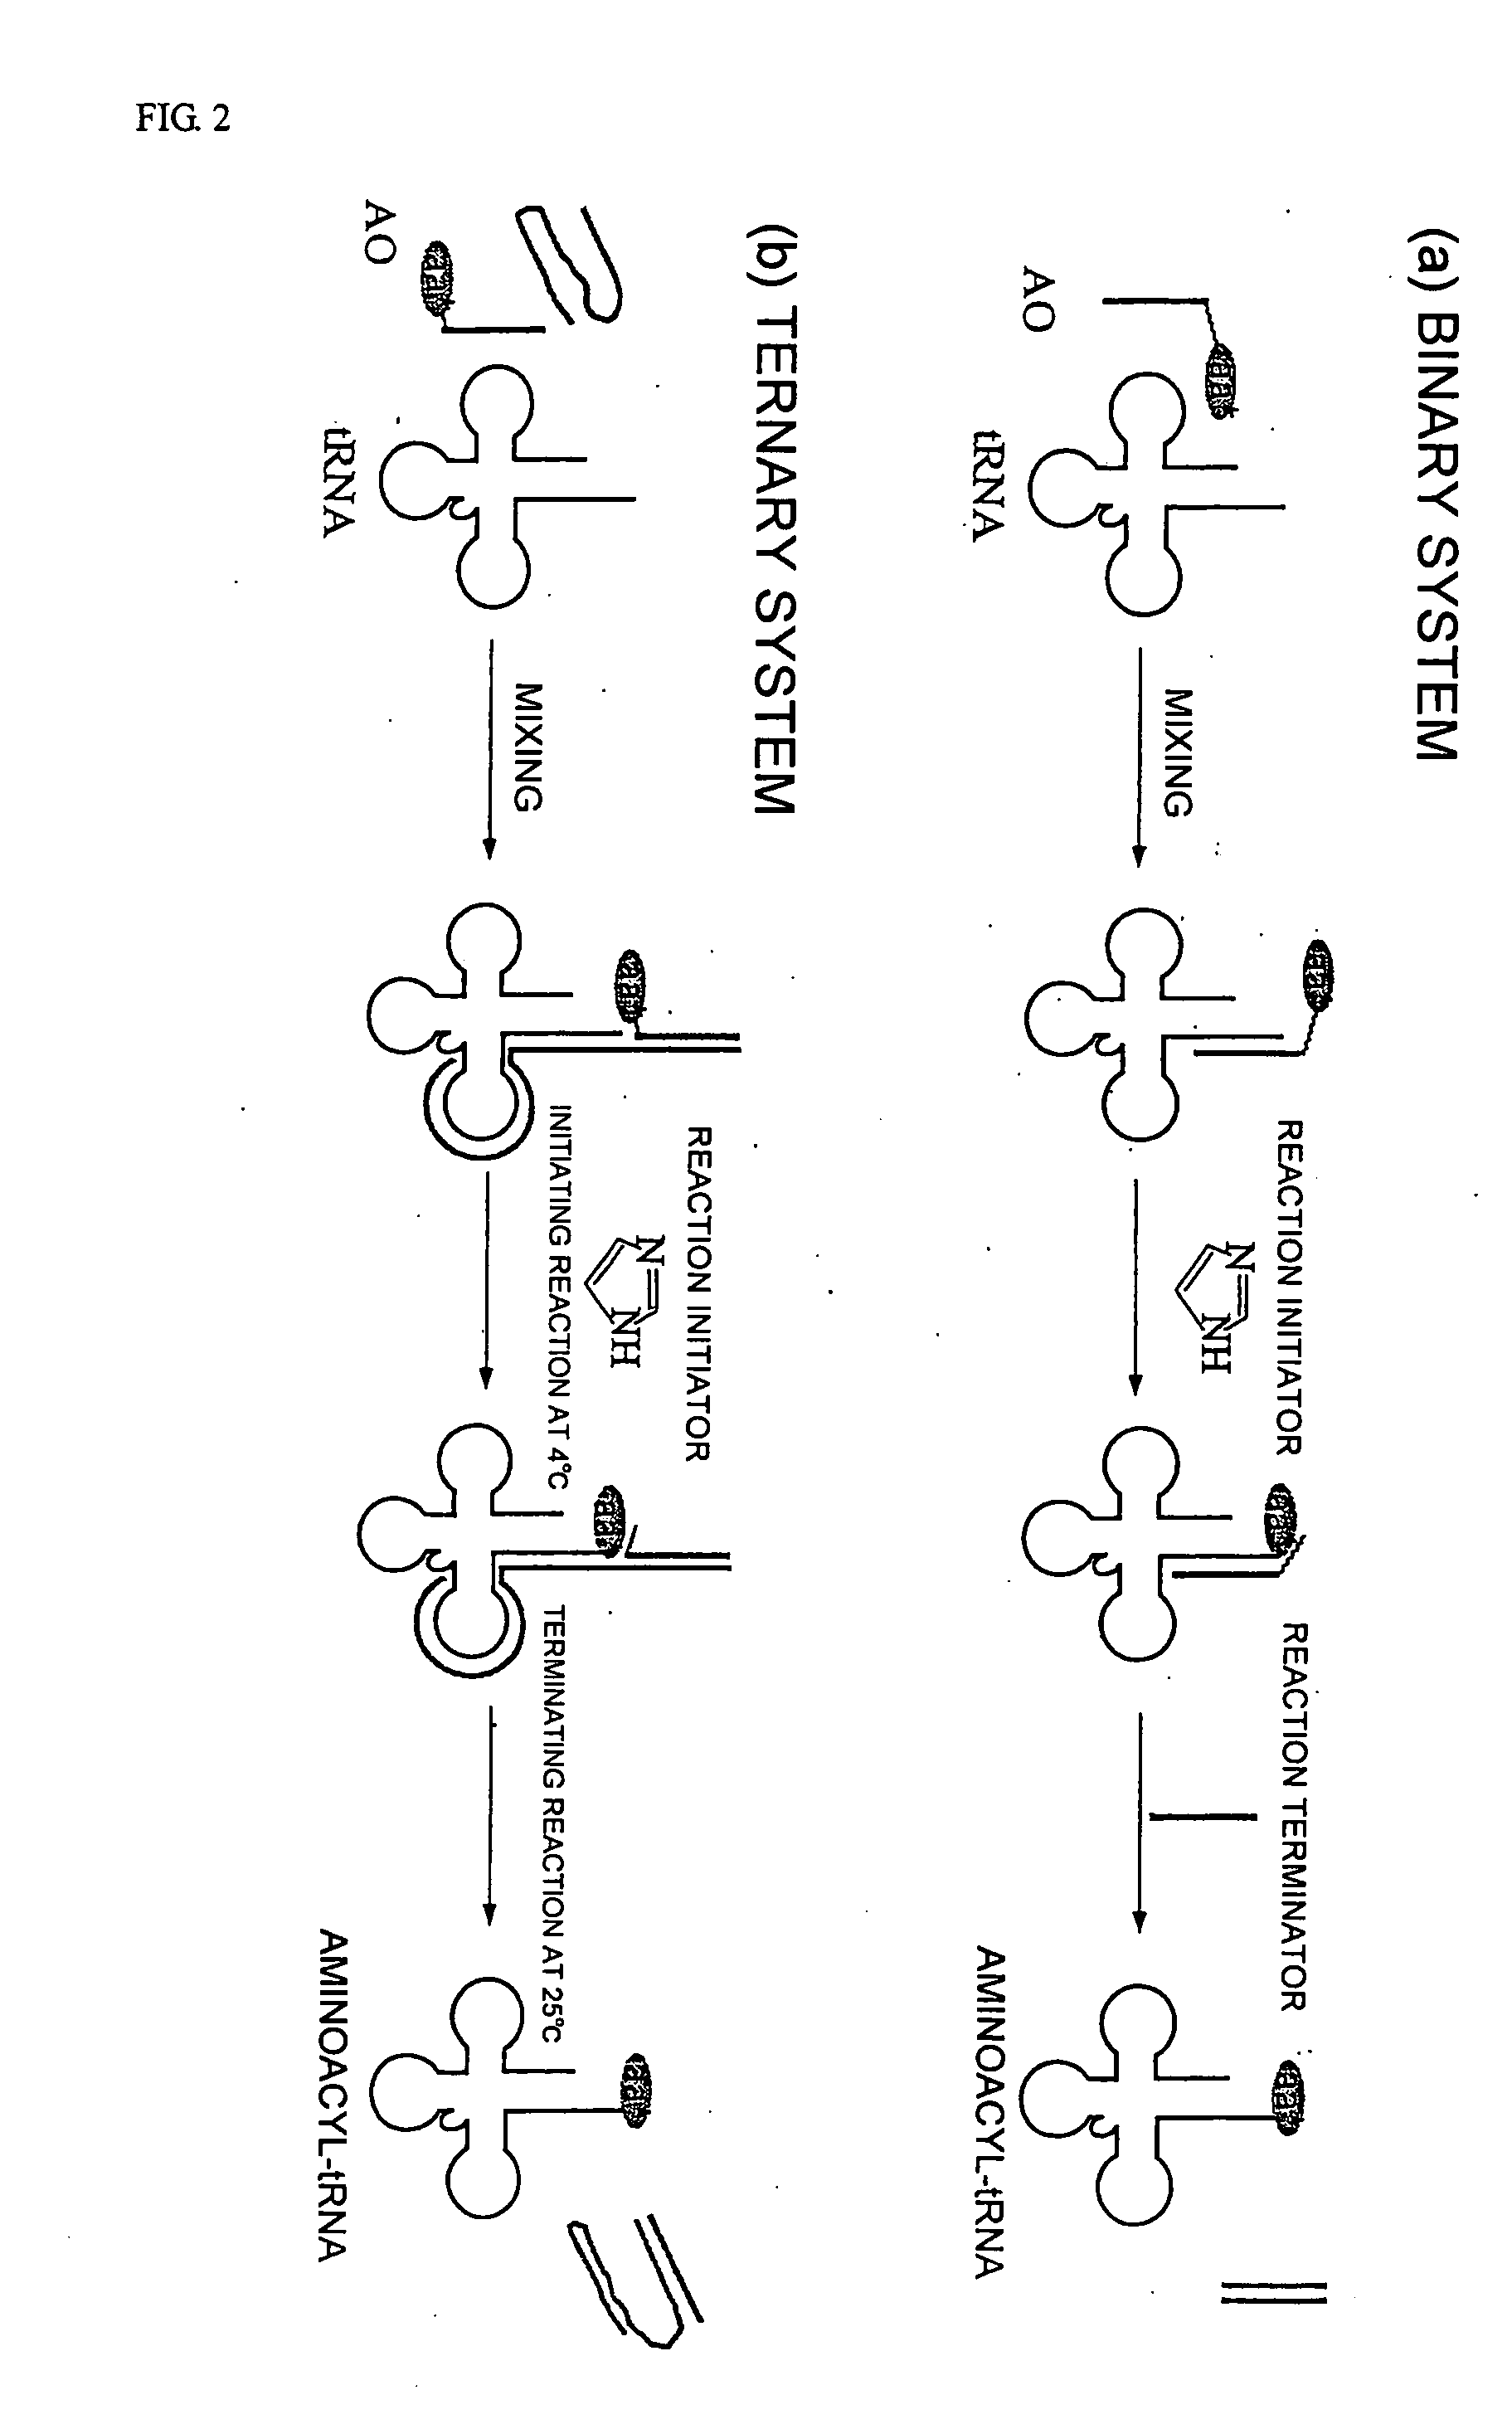 Method of aminoacylating tRNA